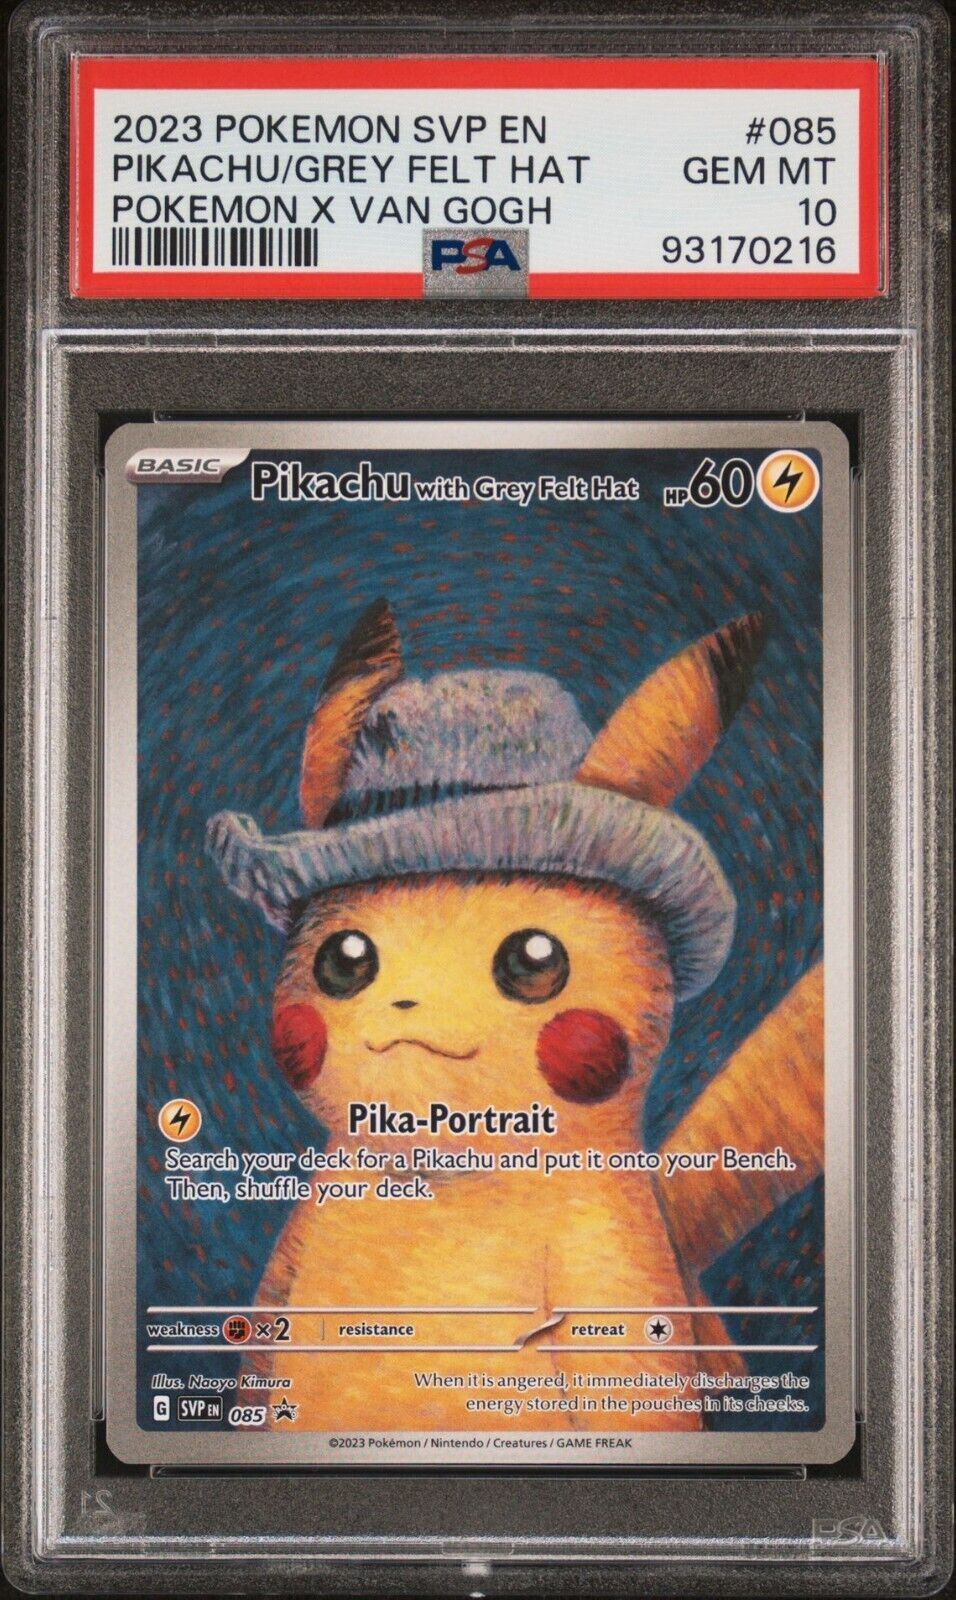 PSA 10 Pikachu With Grey Felt Hat X Van Gogh 085 Pokemon TCG Promo Card GEM MINT